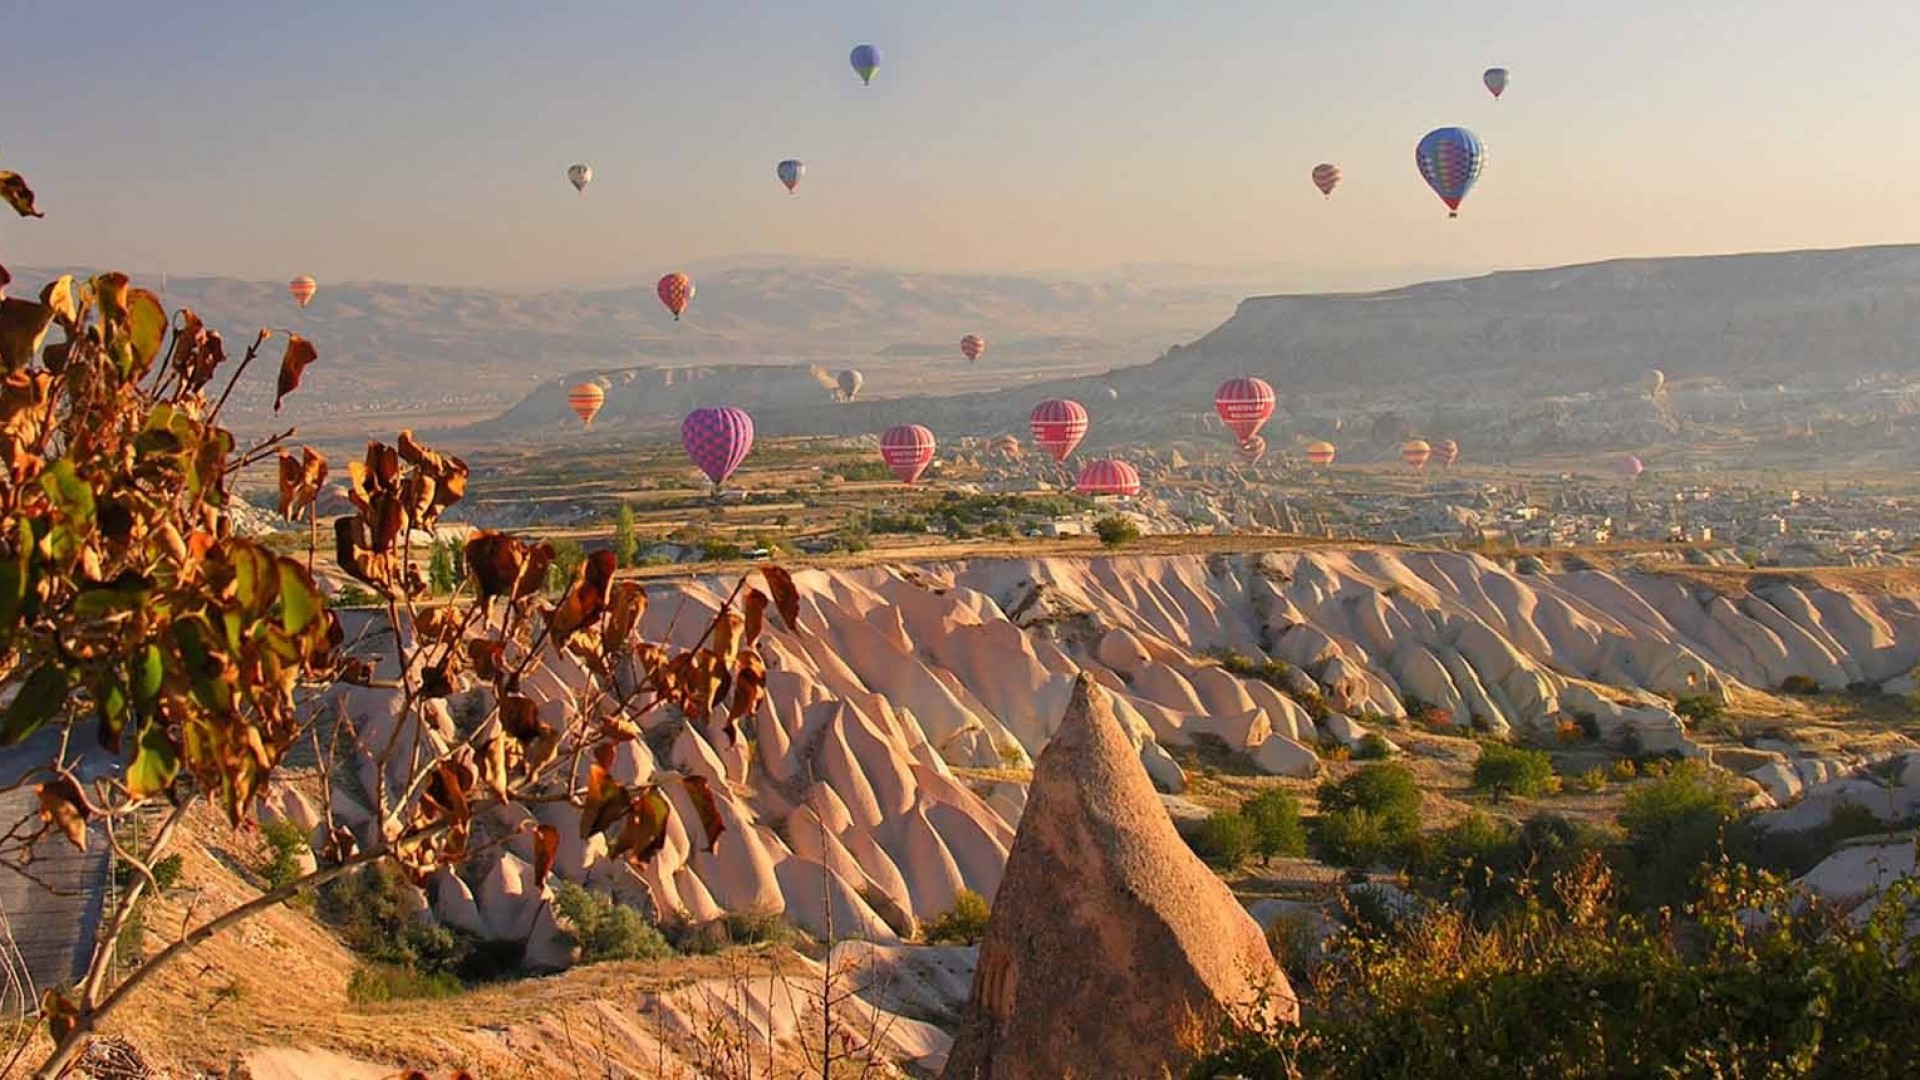 Turkey Cappadocia - #TurkeyTourism- #Travel Information And Guide #FrizeMedia #DigitalMarketing